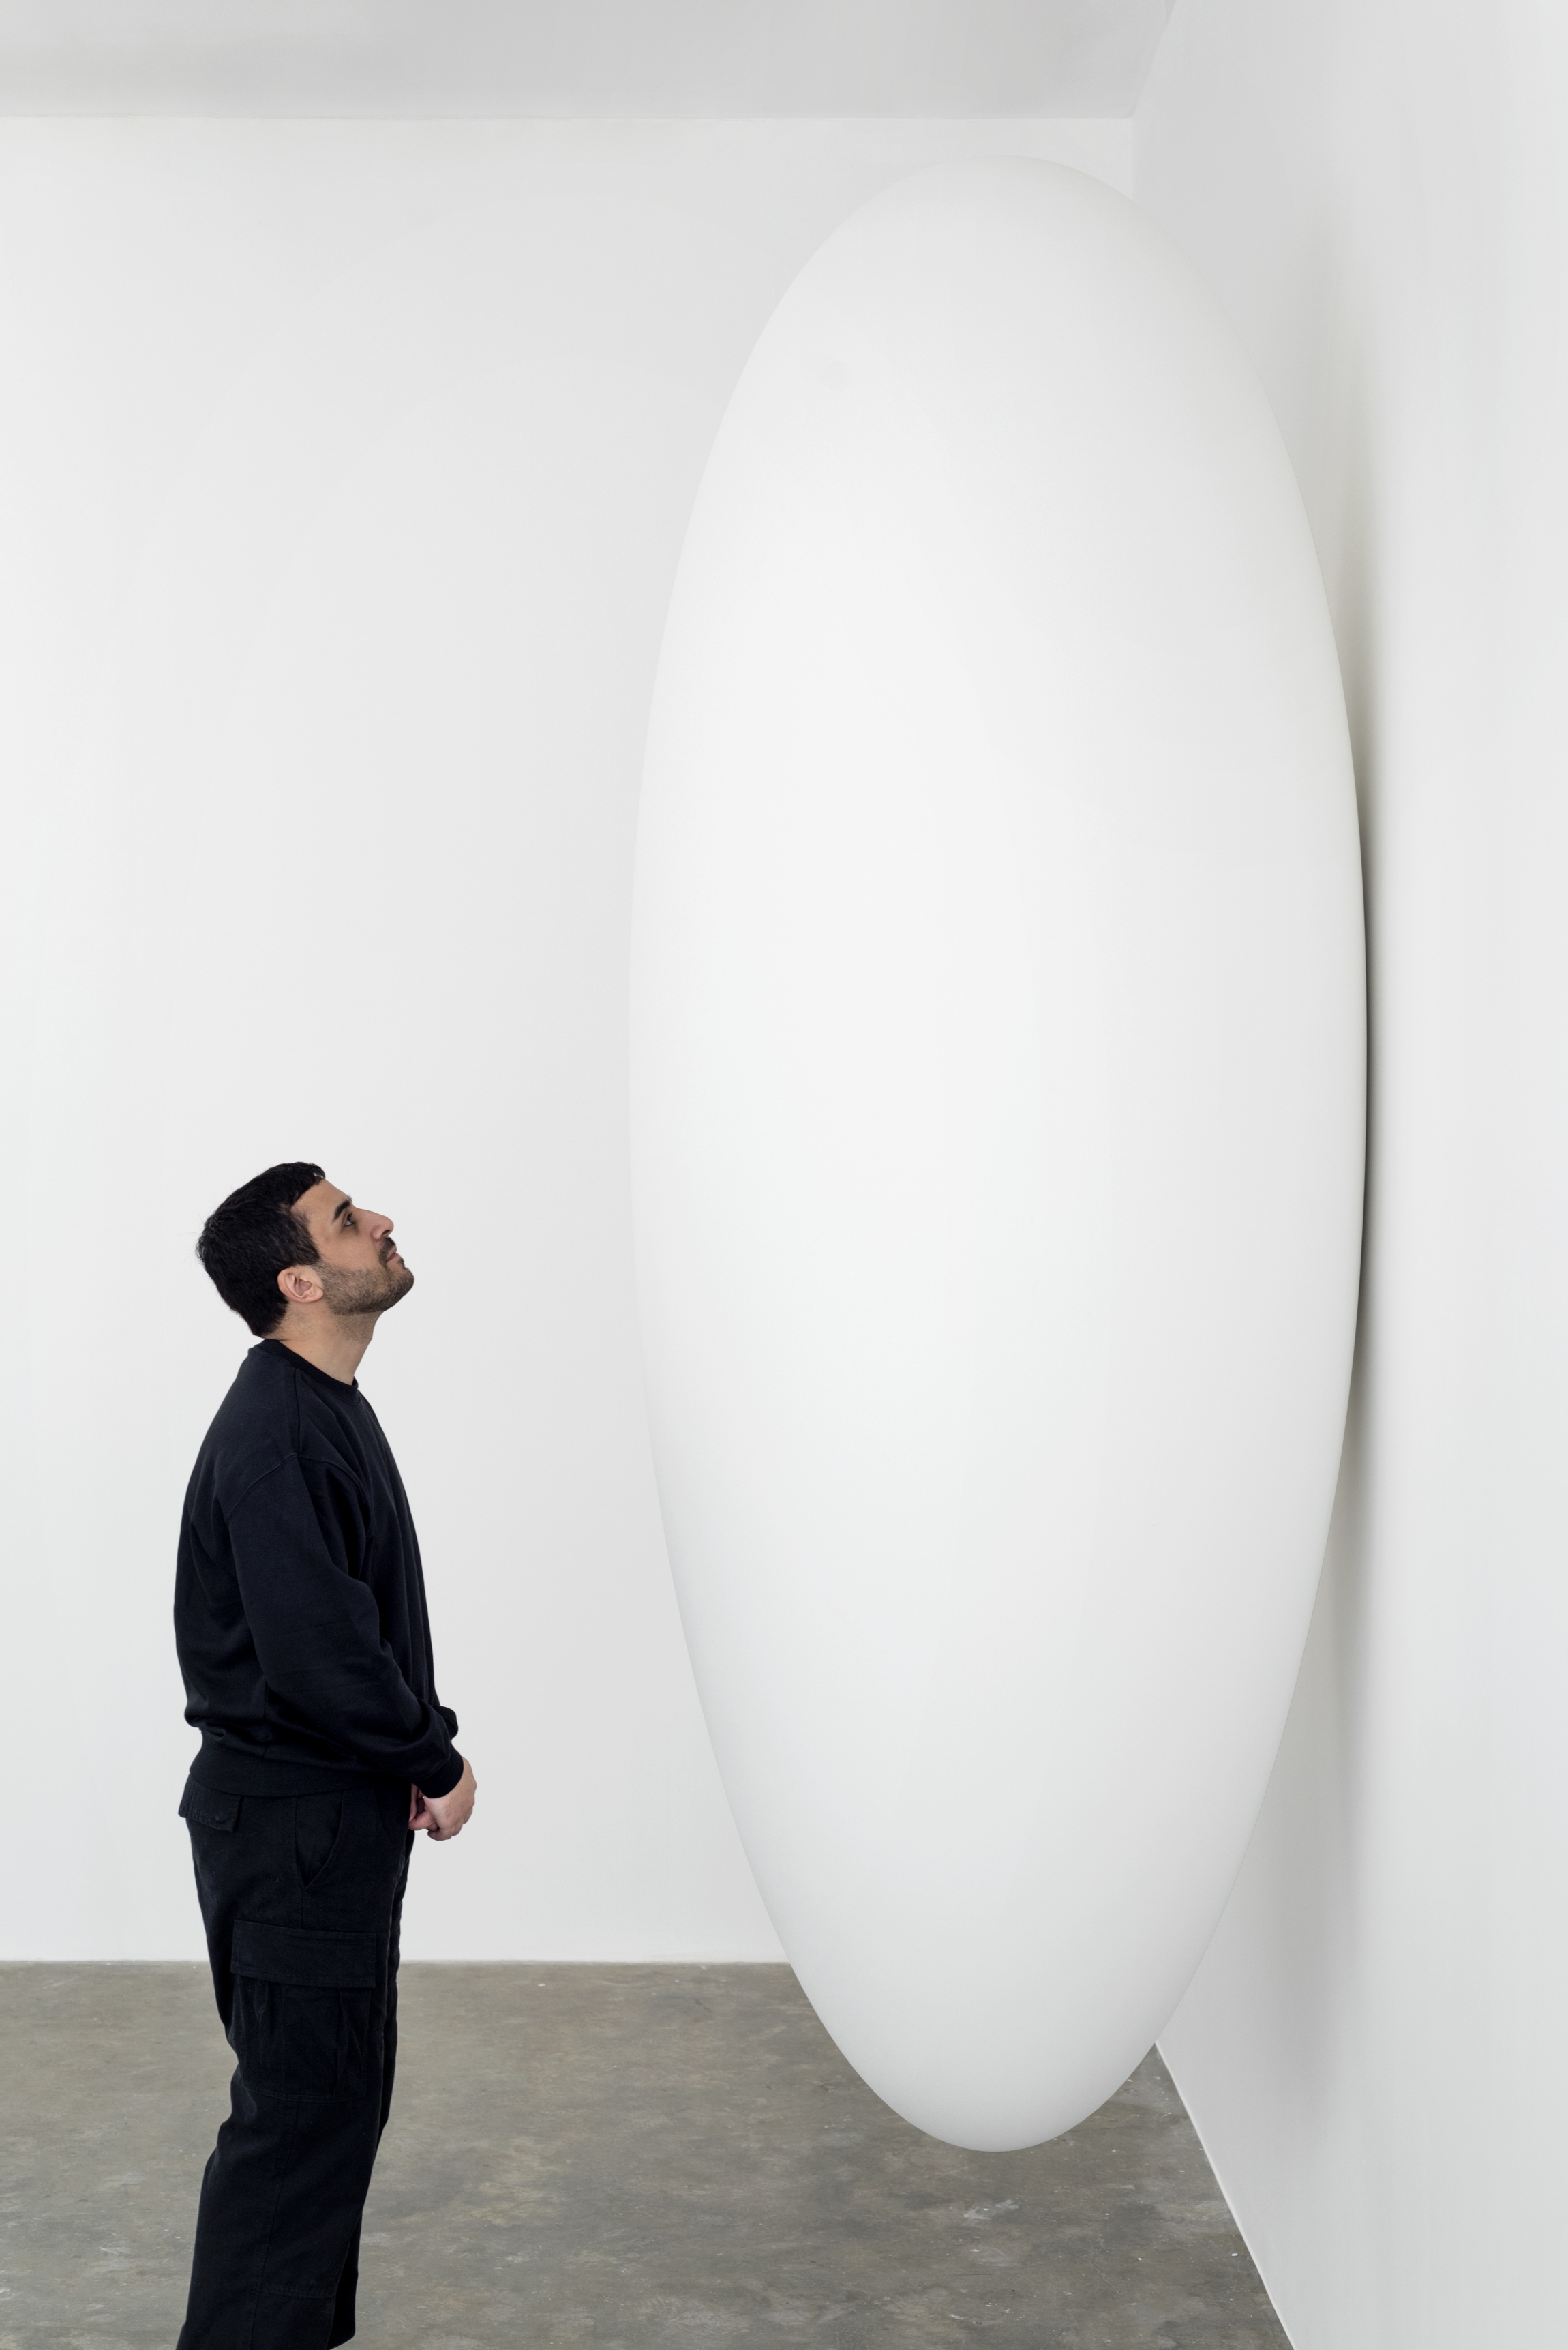 Tarik Kiswanson next to his sculpture "Nest" (2022, fiberglass and resin, edition 7 + 2 APs, 270 x 100 cm)